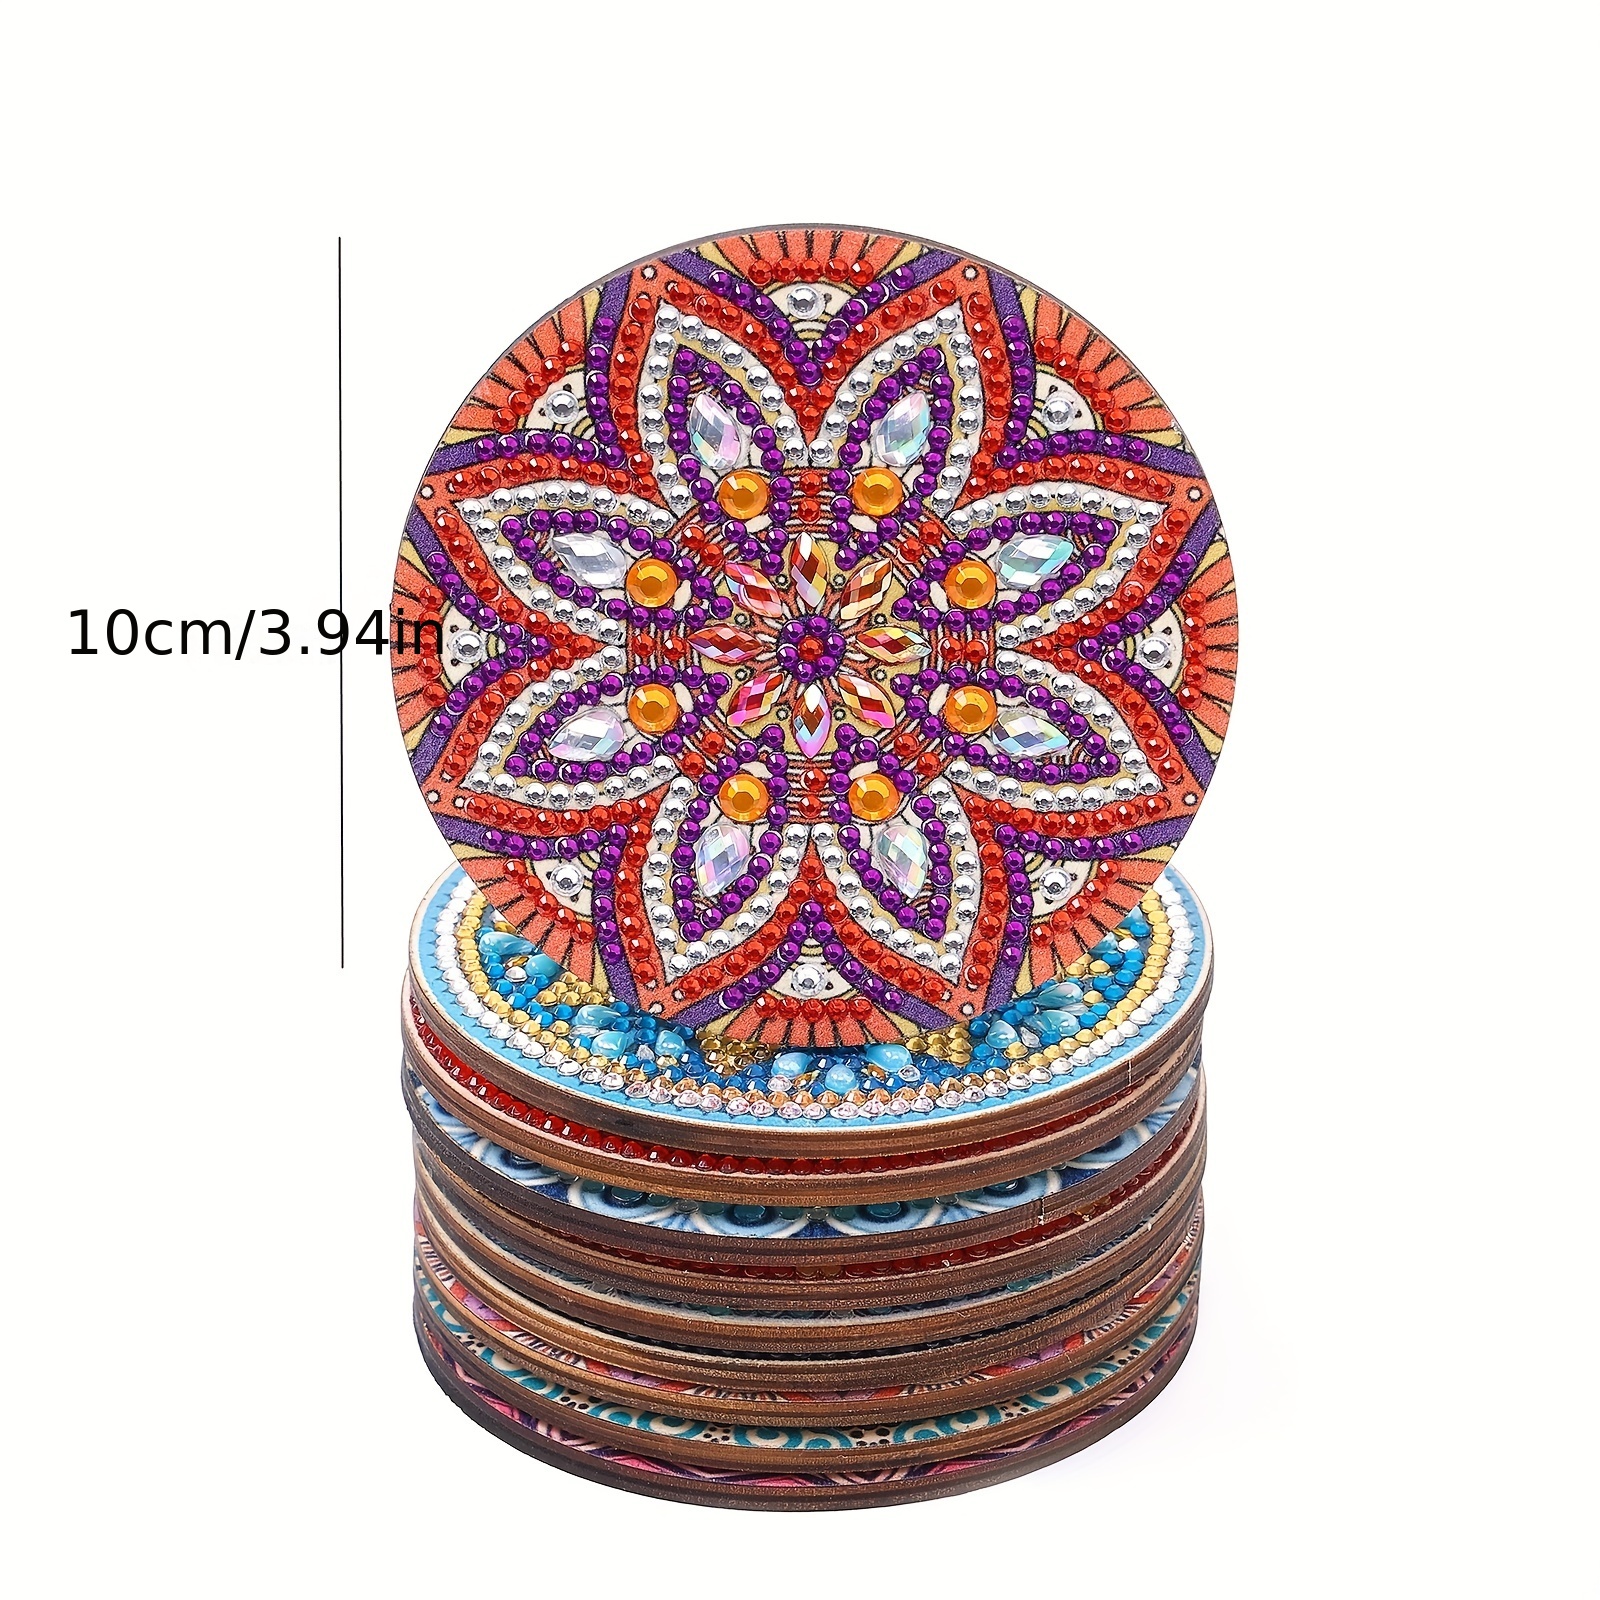 12pcs Mandala Special Shaped Diamond Painting Coaster Set (With Stand)